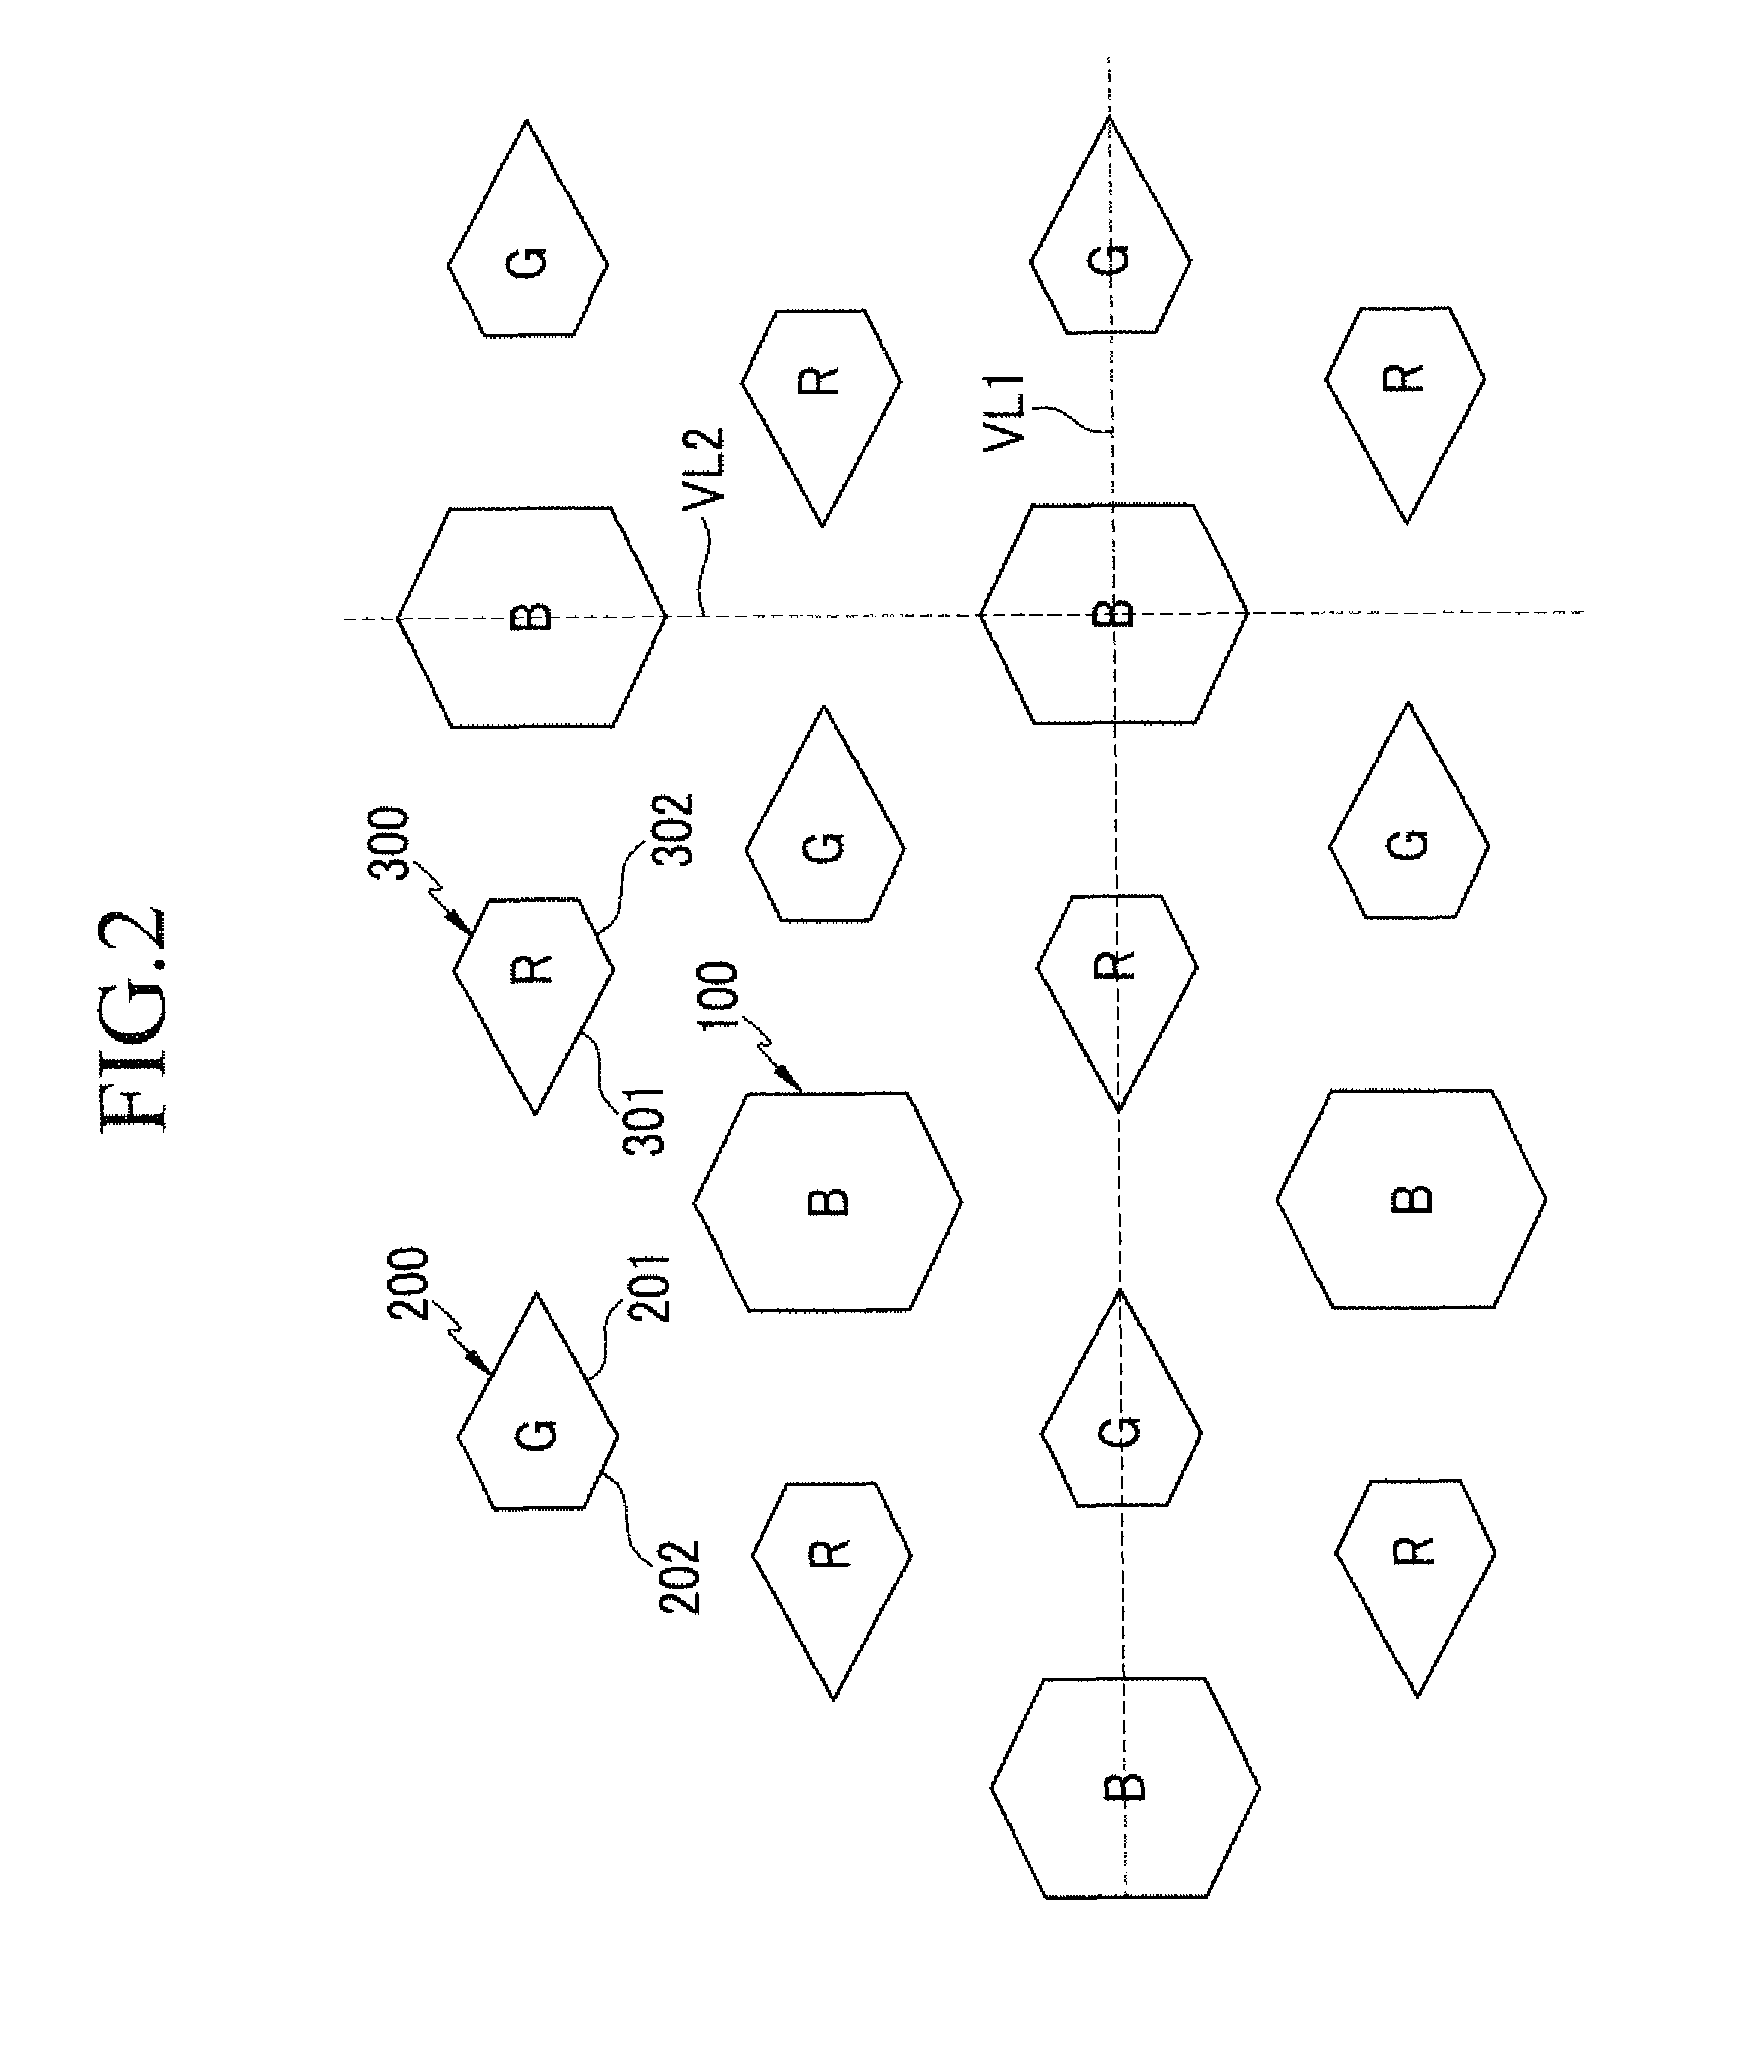 Pixel arrangement structure for organic light emitting diode display